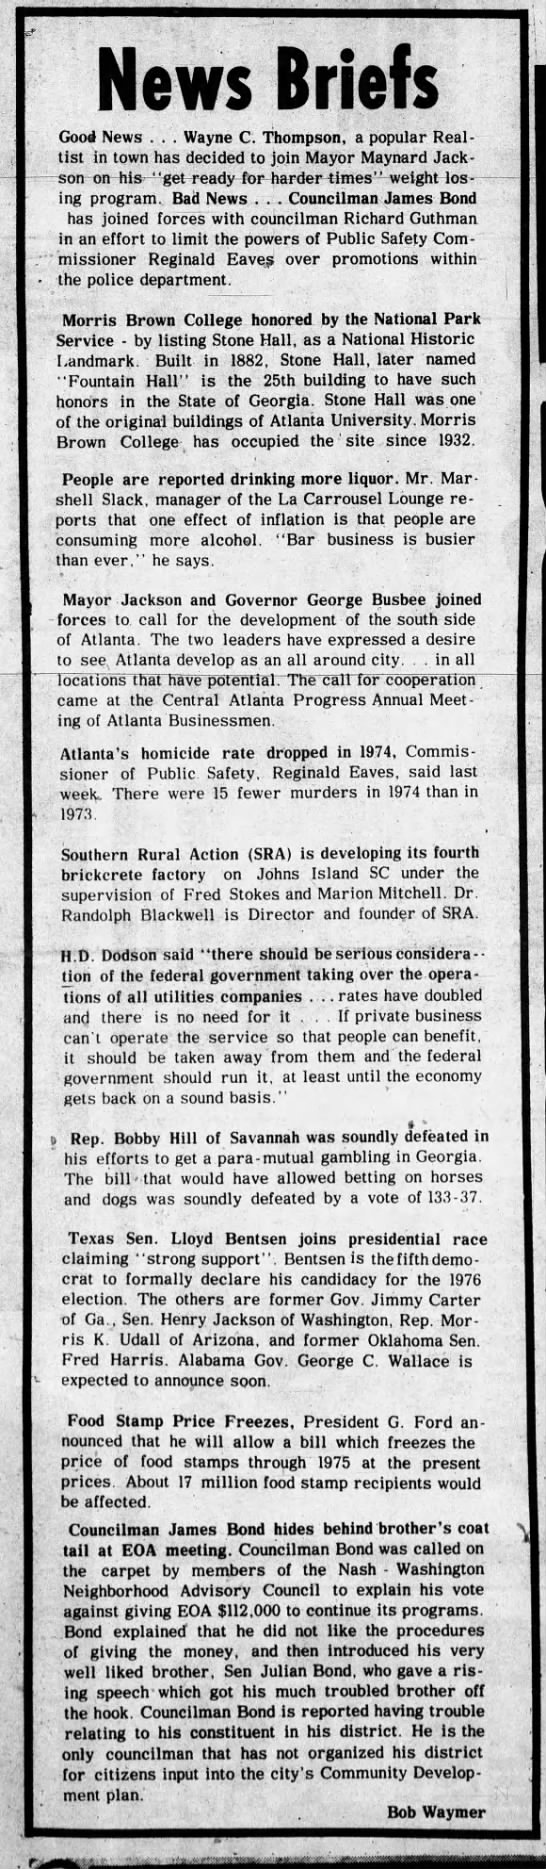 News Briefs 1975 - The Atlanta Voice - 